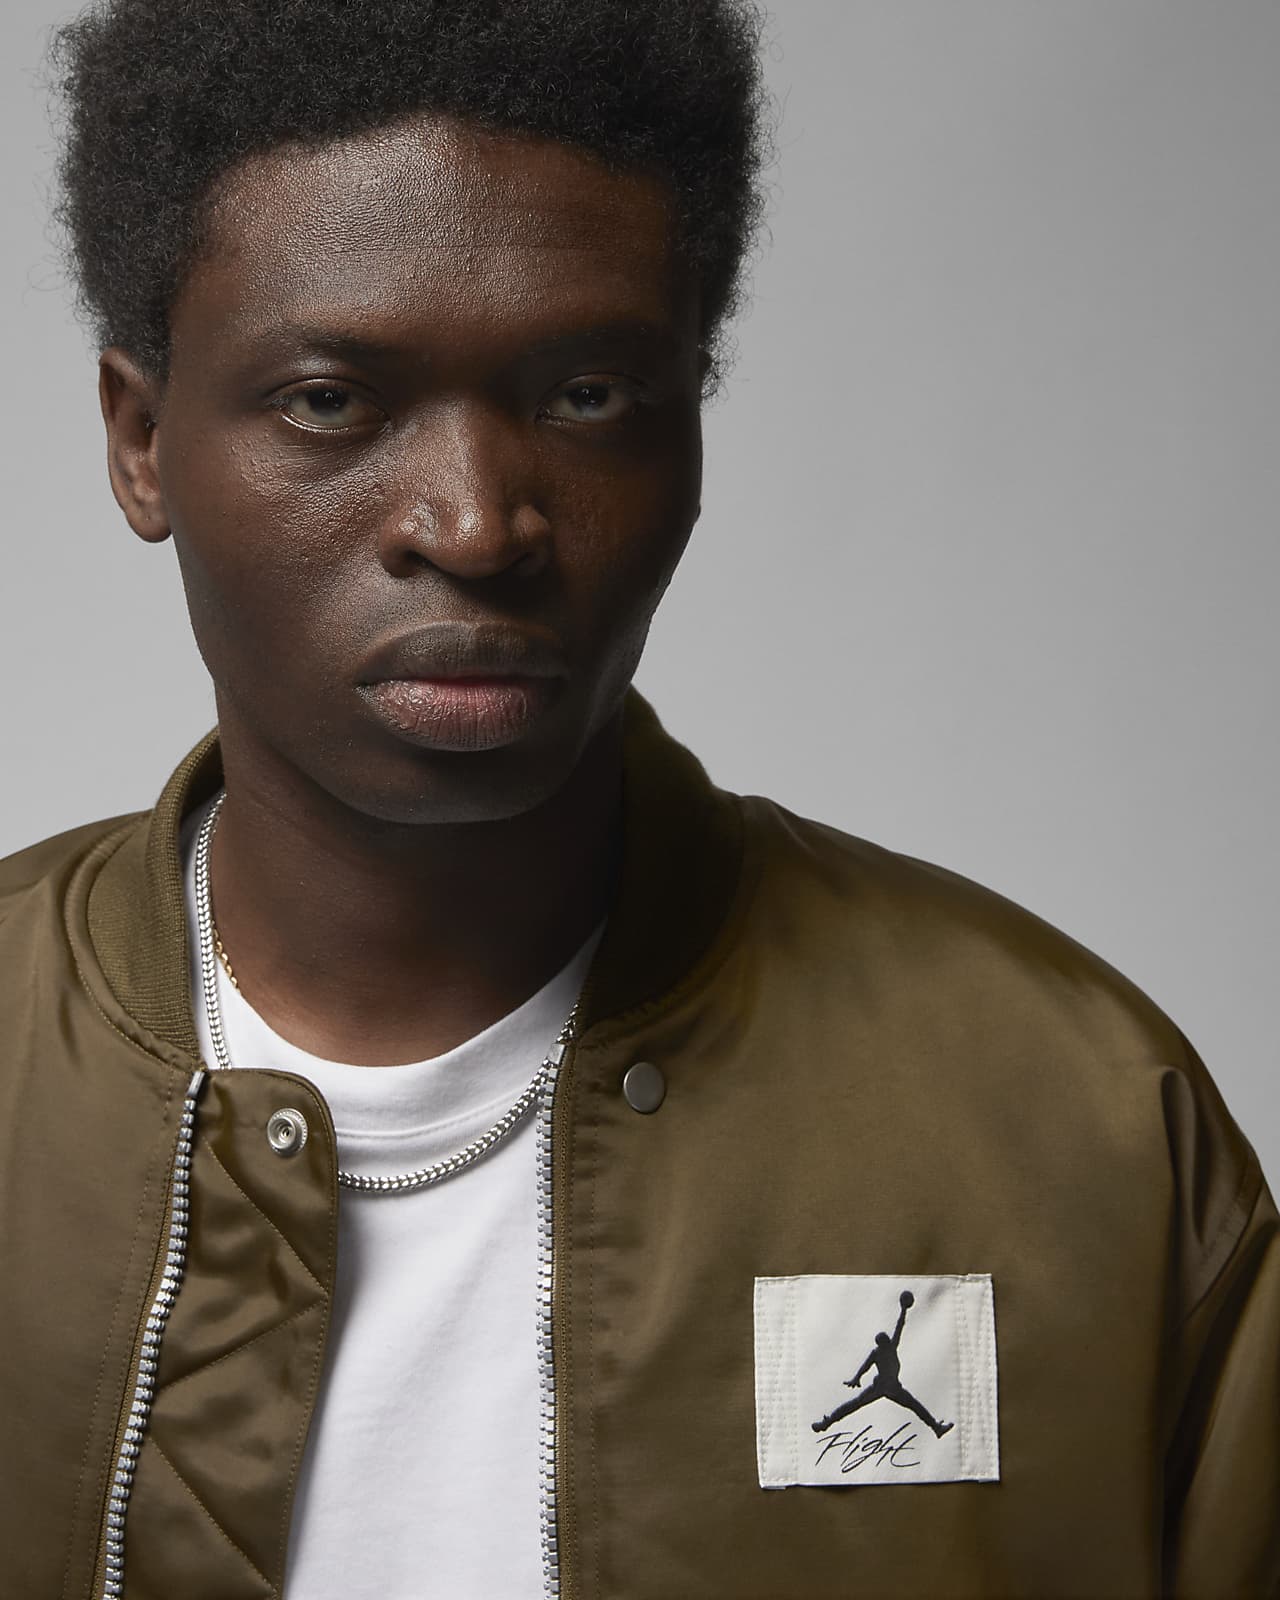 Jordan Essentials Men's Poly Puffer Jacket. Nike LU